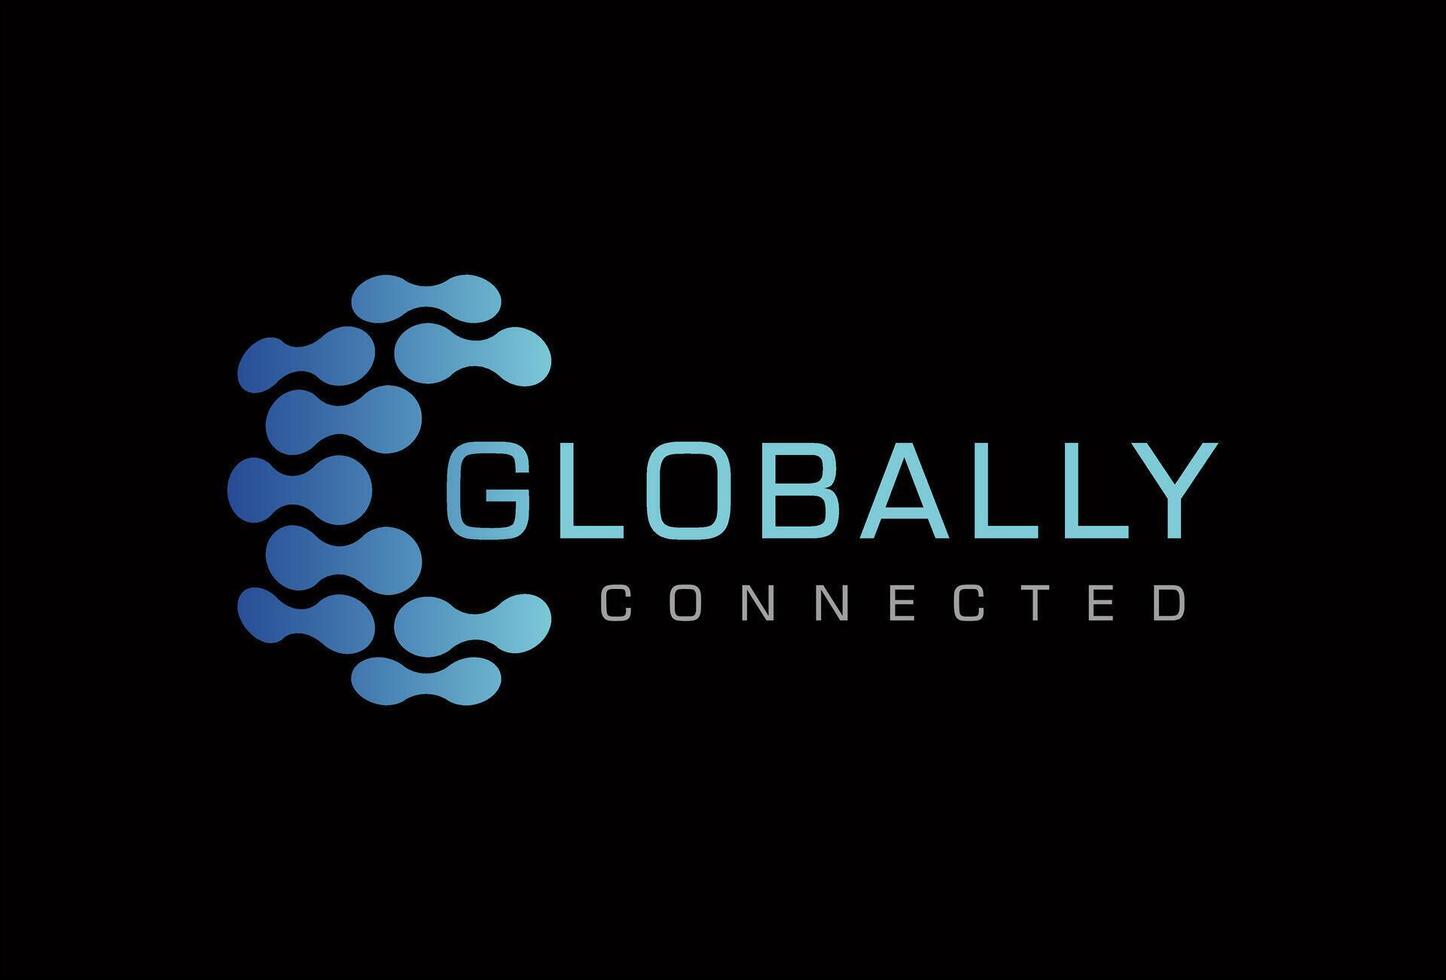 Globally connected technology logo design template vector